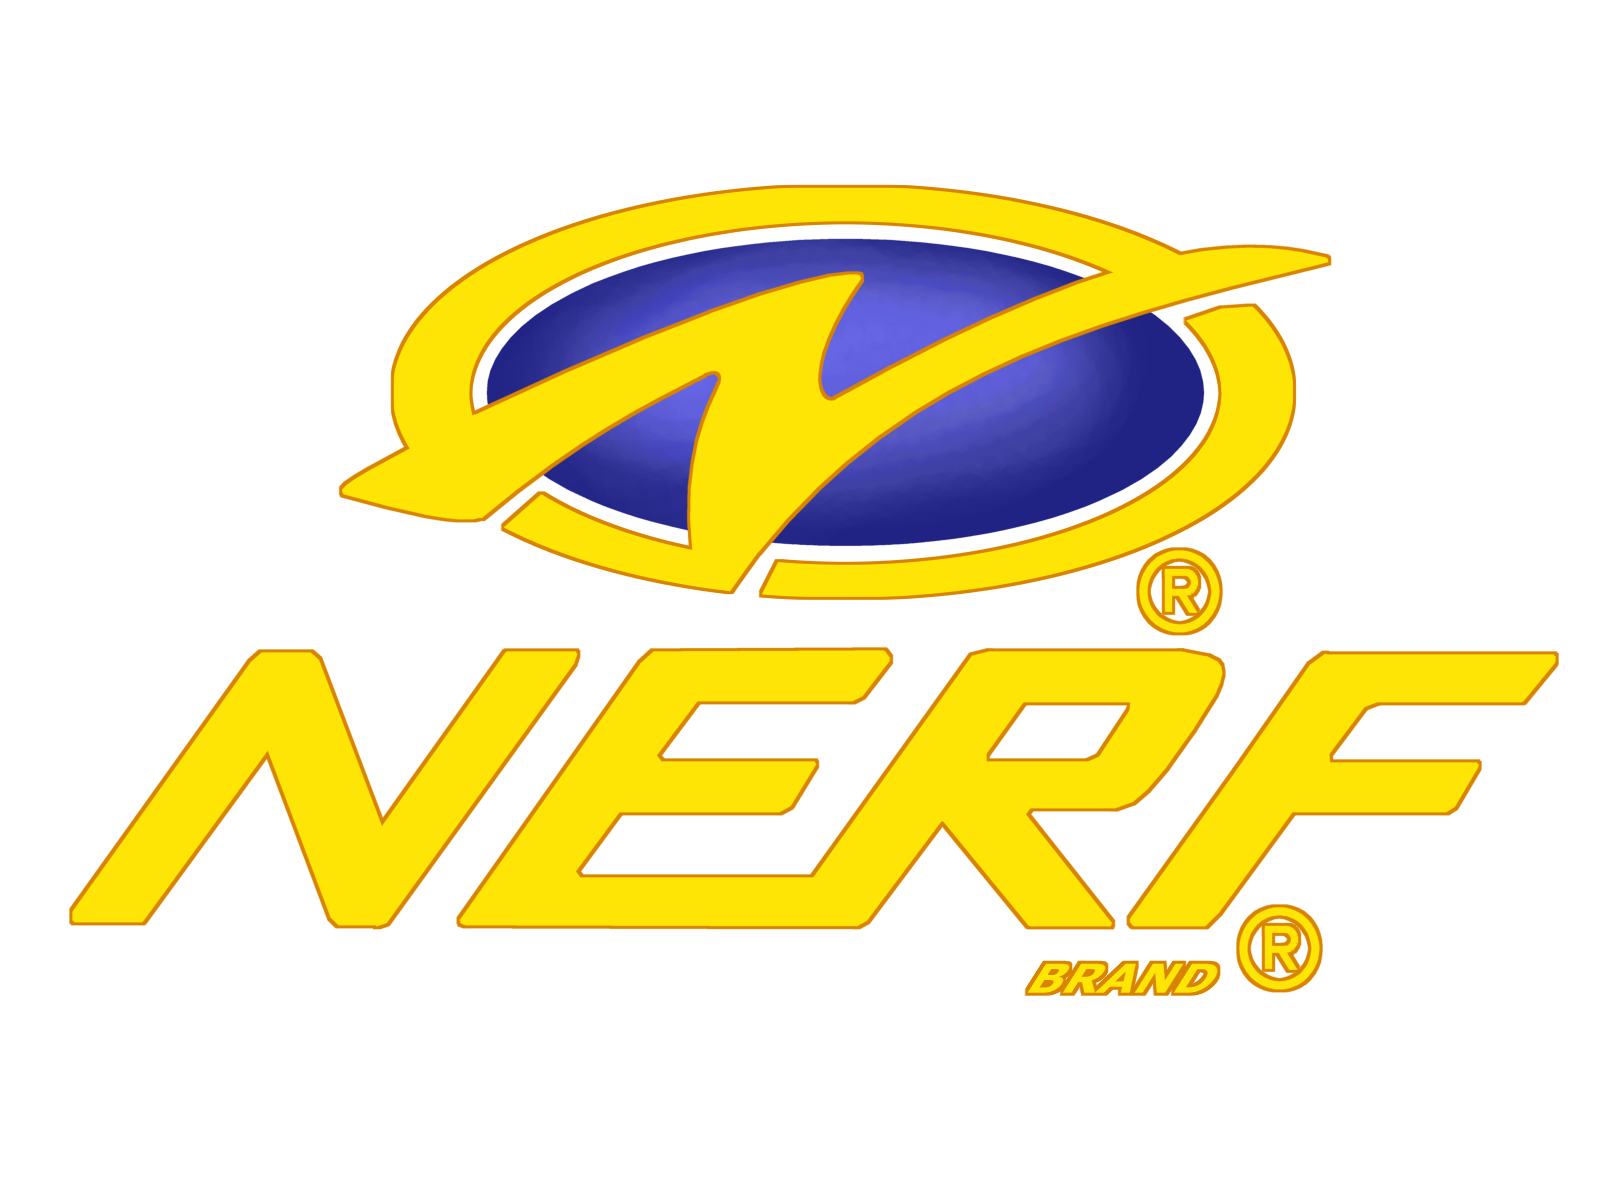 Printable Nerf Logo - Customize and Print